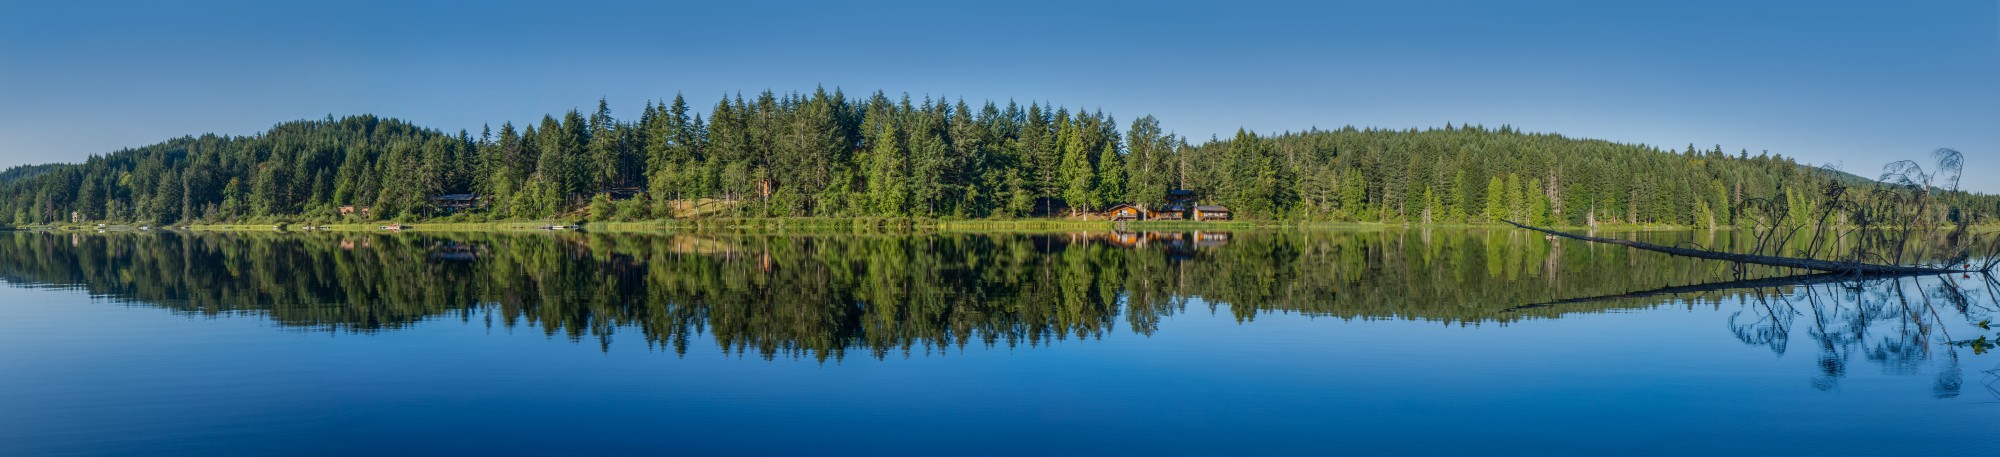 Cusheon Lake in the early morning, Saltspring Island, British Columbia, Canada